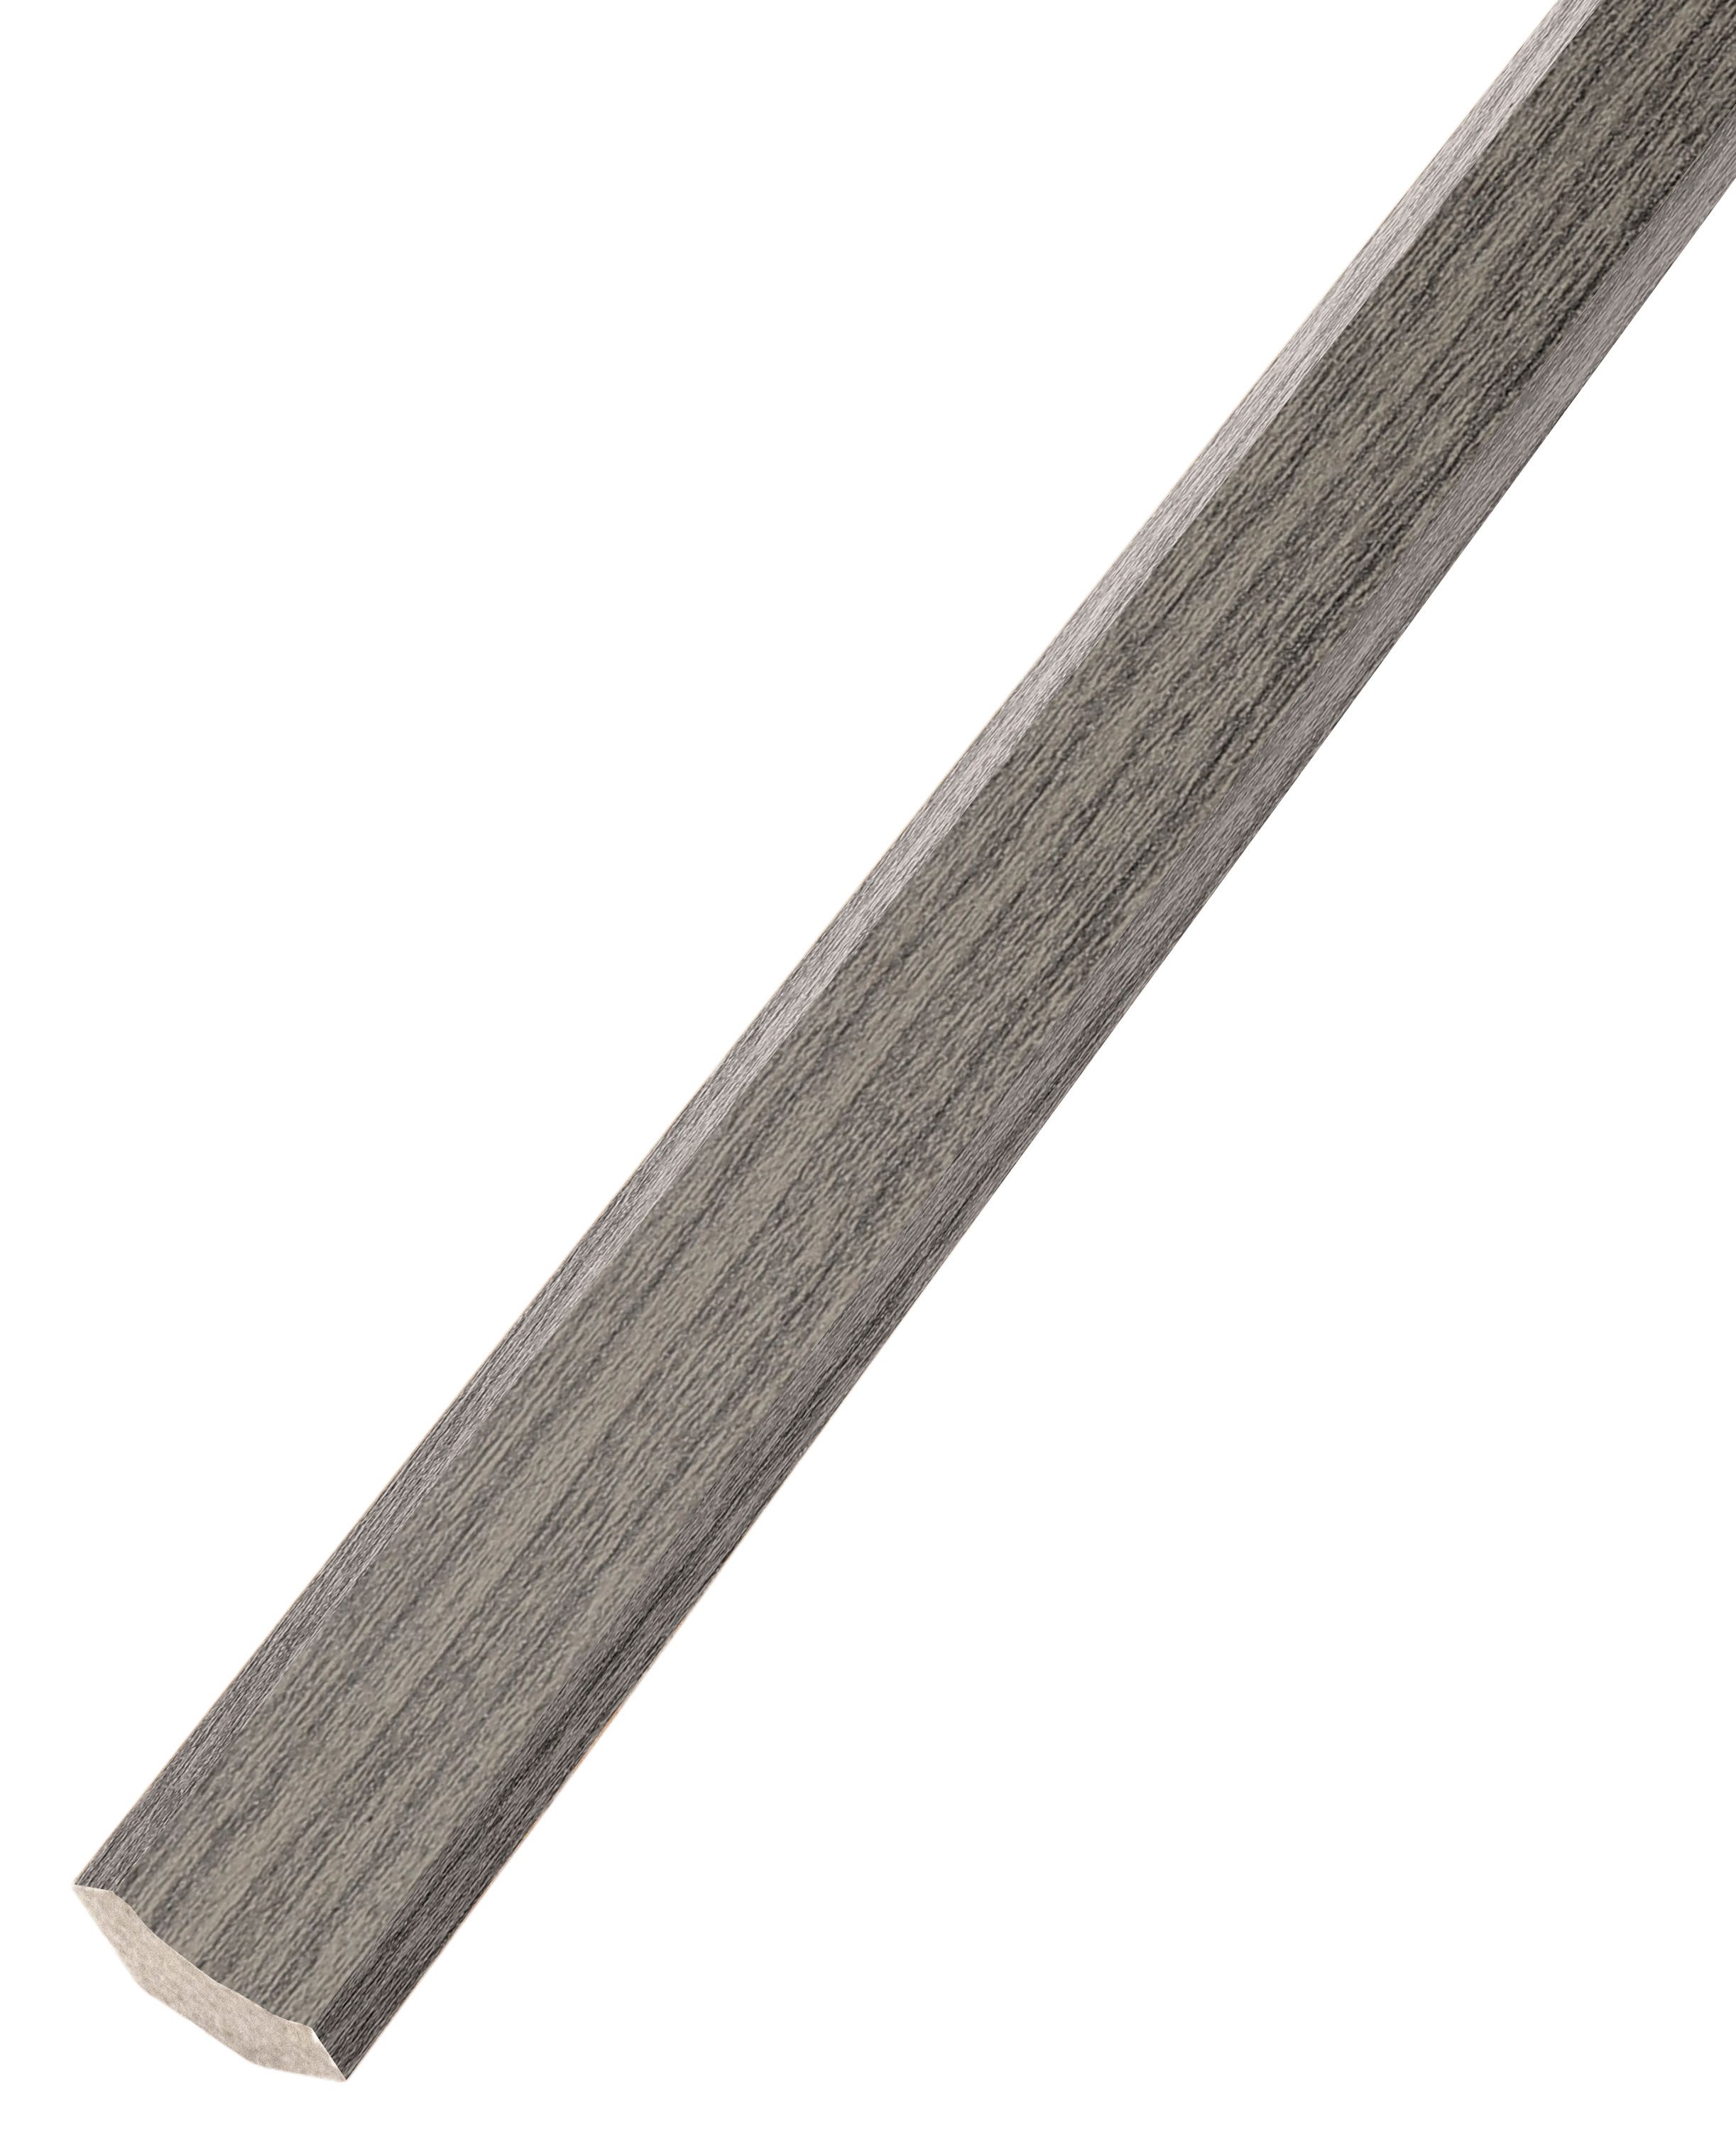 Elderwood Medium Grey Oak Flooring Trim - 2m